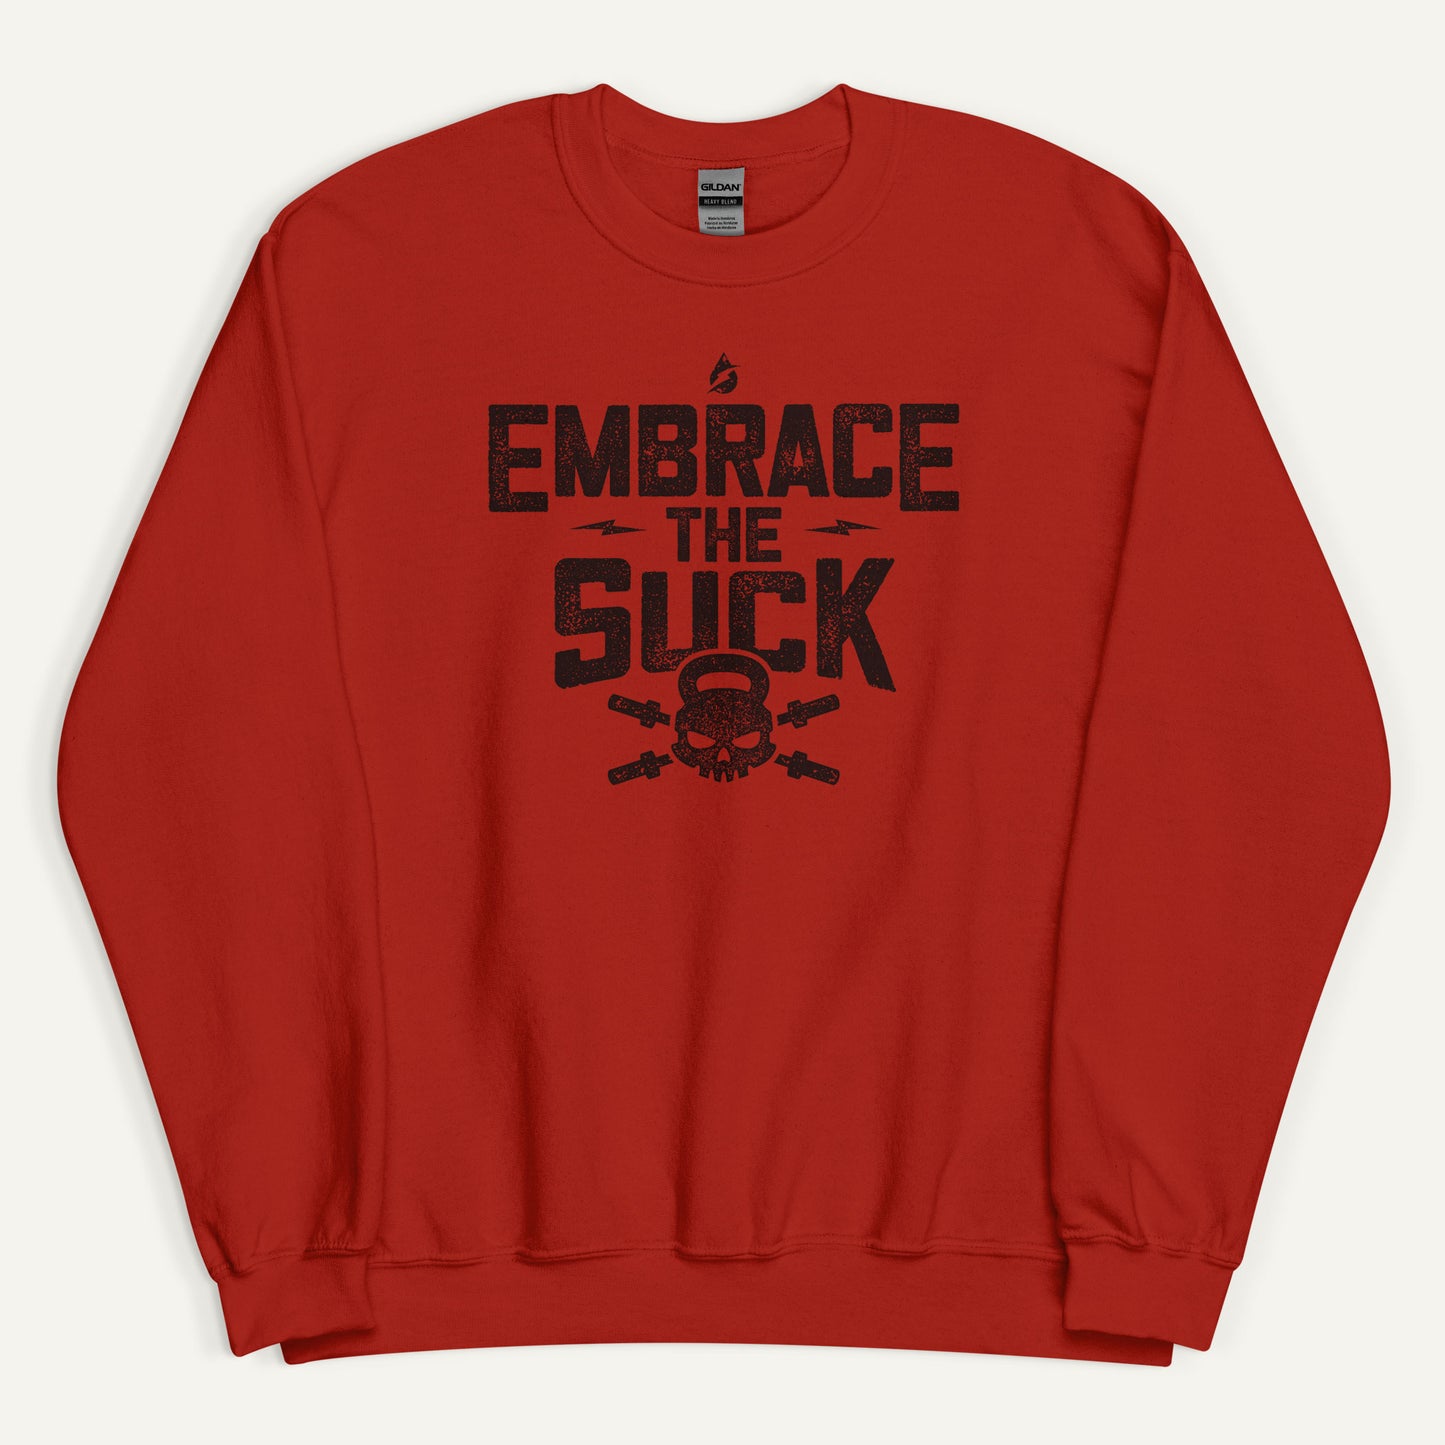 Embrace The Suck Sweatshirt